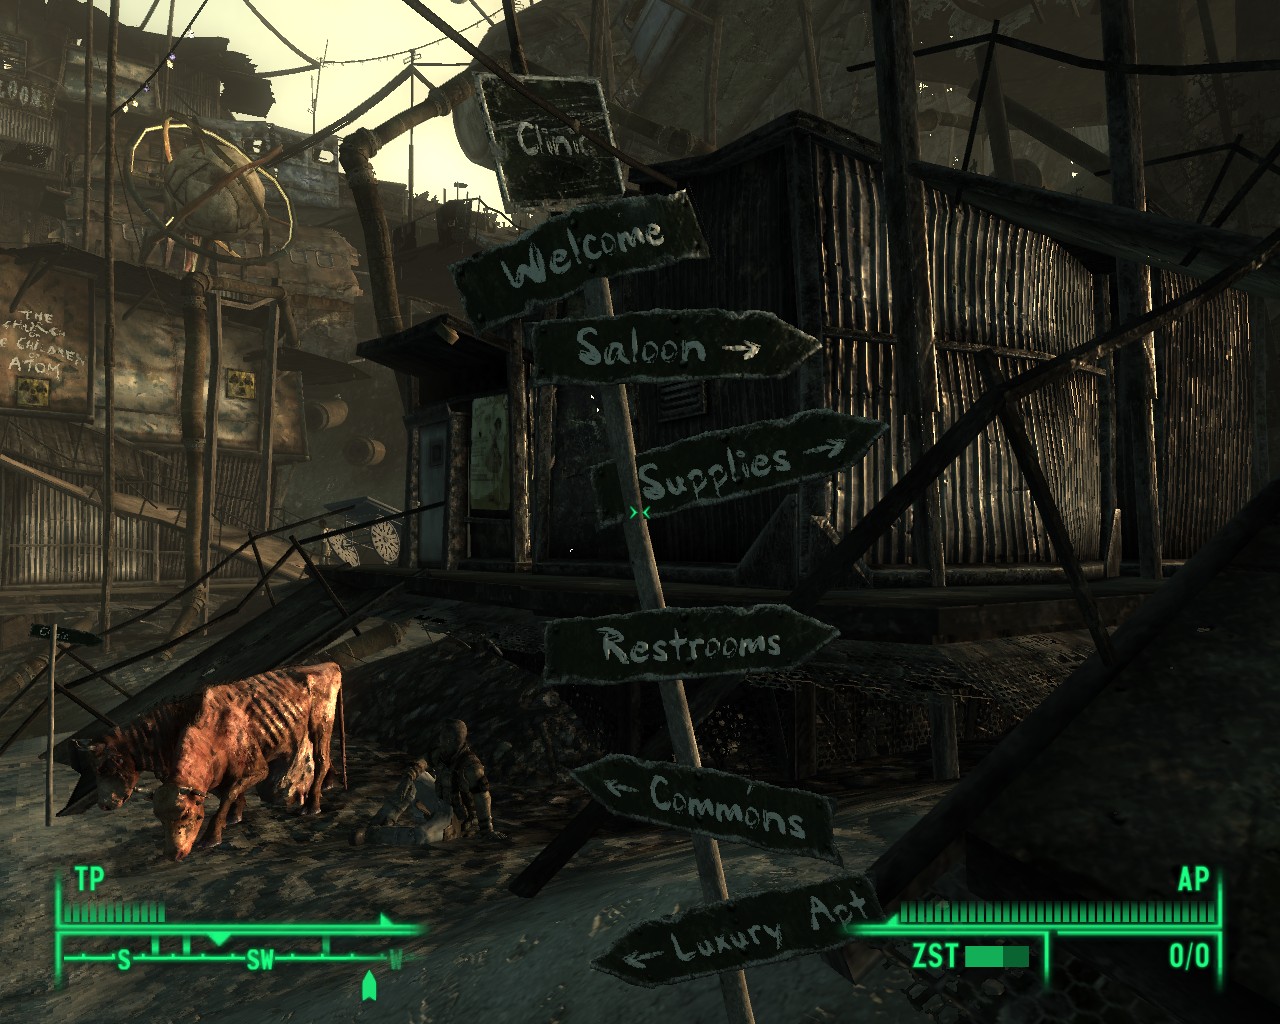 Spieletest: Fallout 3 - Abenteuer nach der Atombombe - Fallout 3